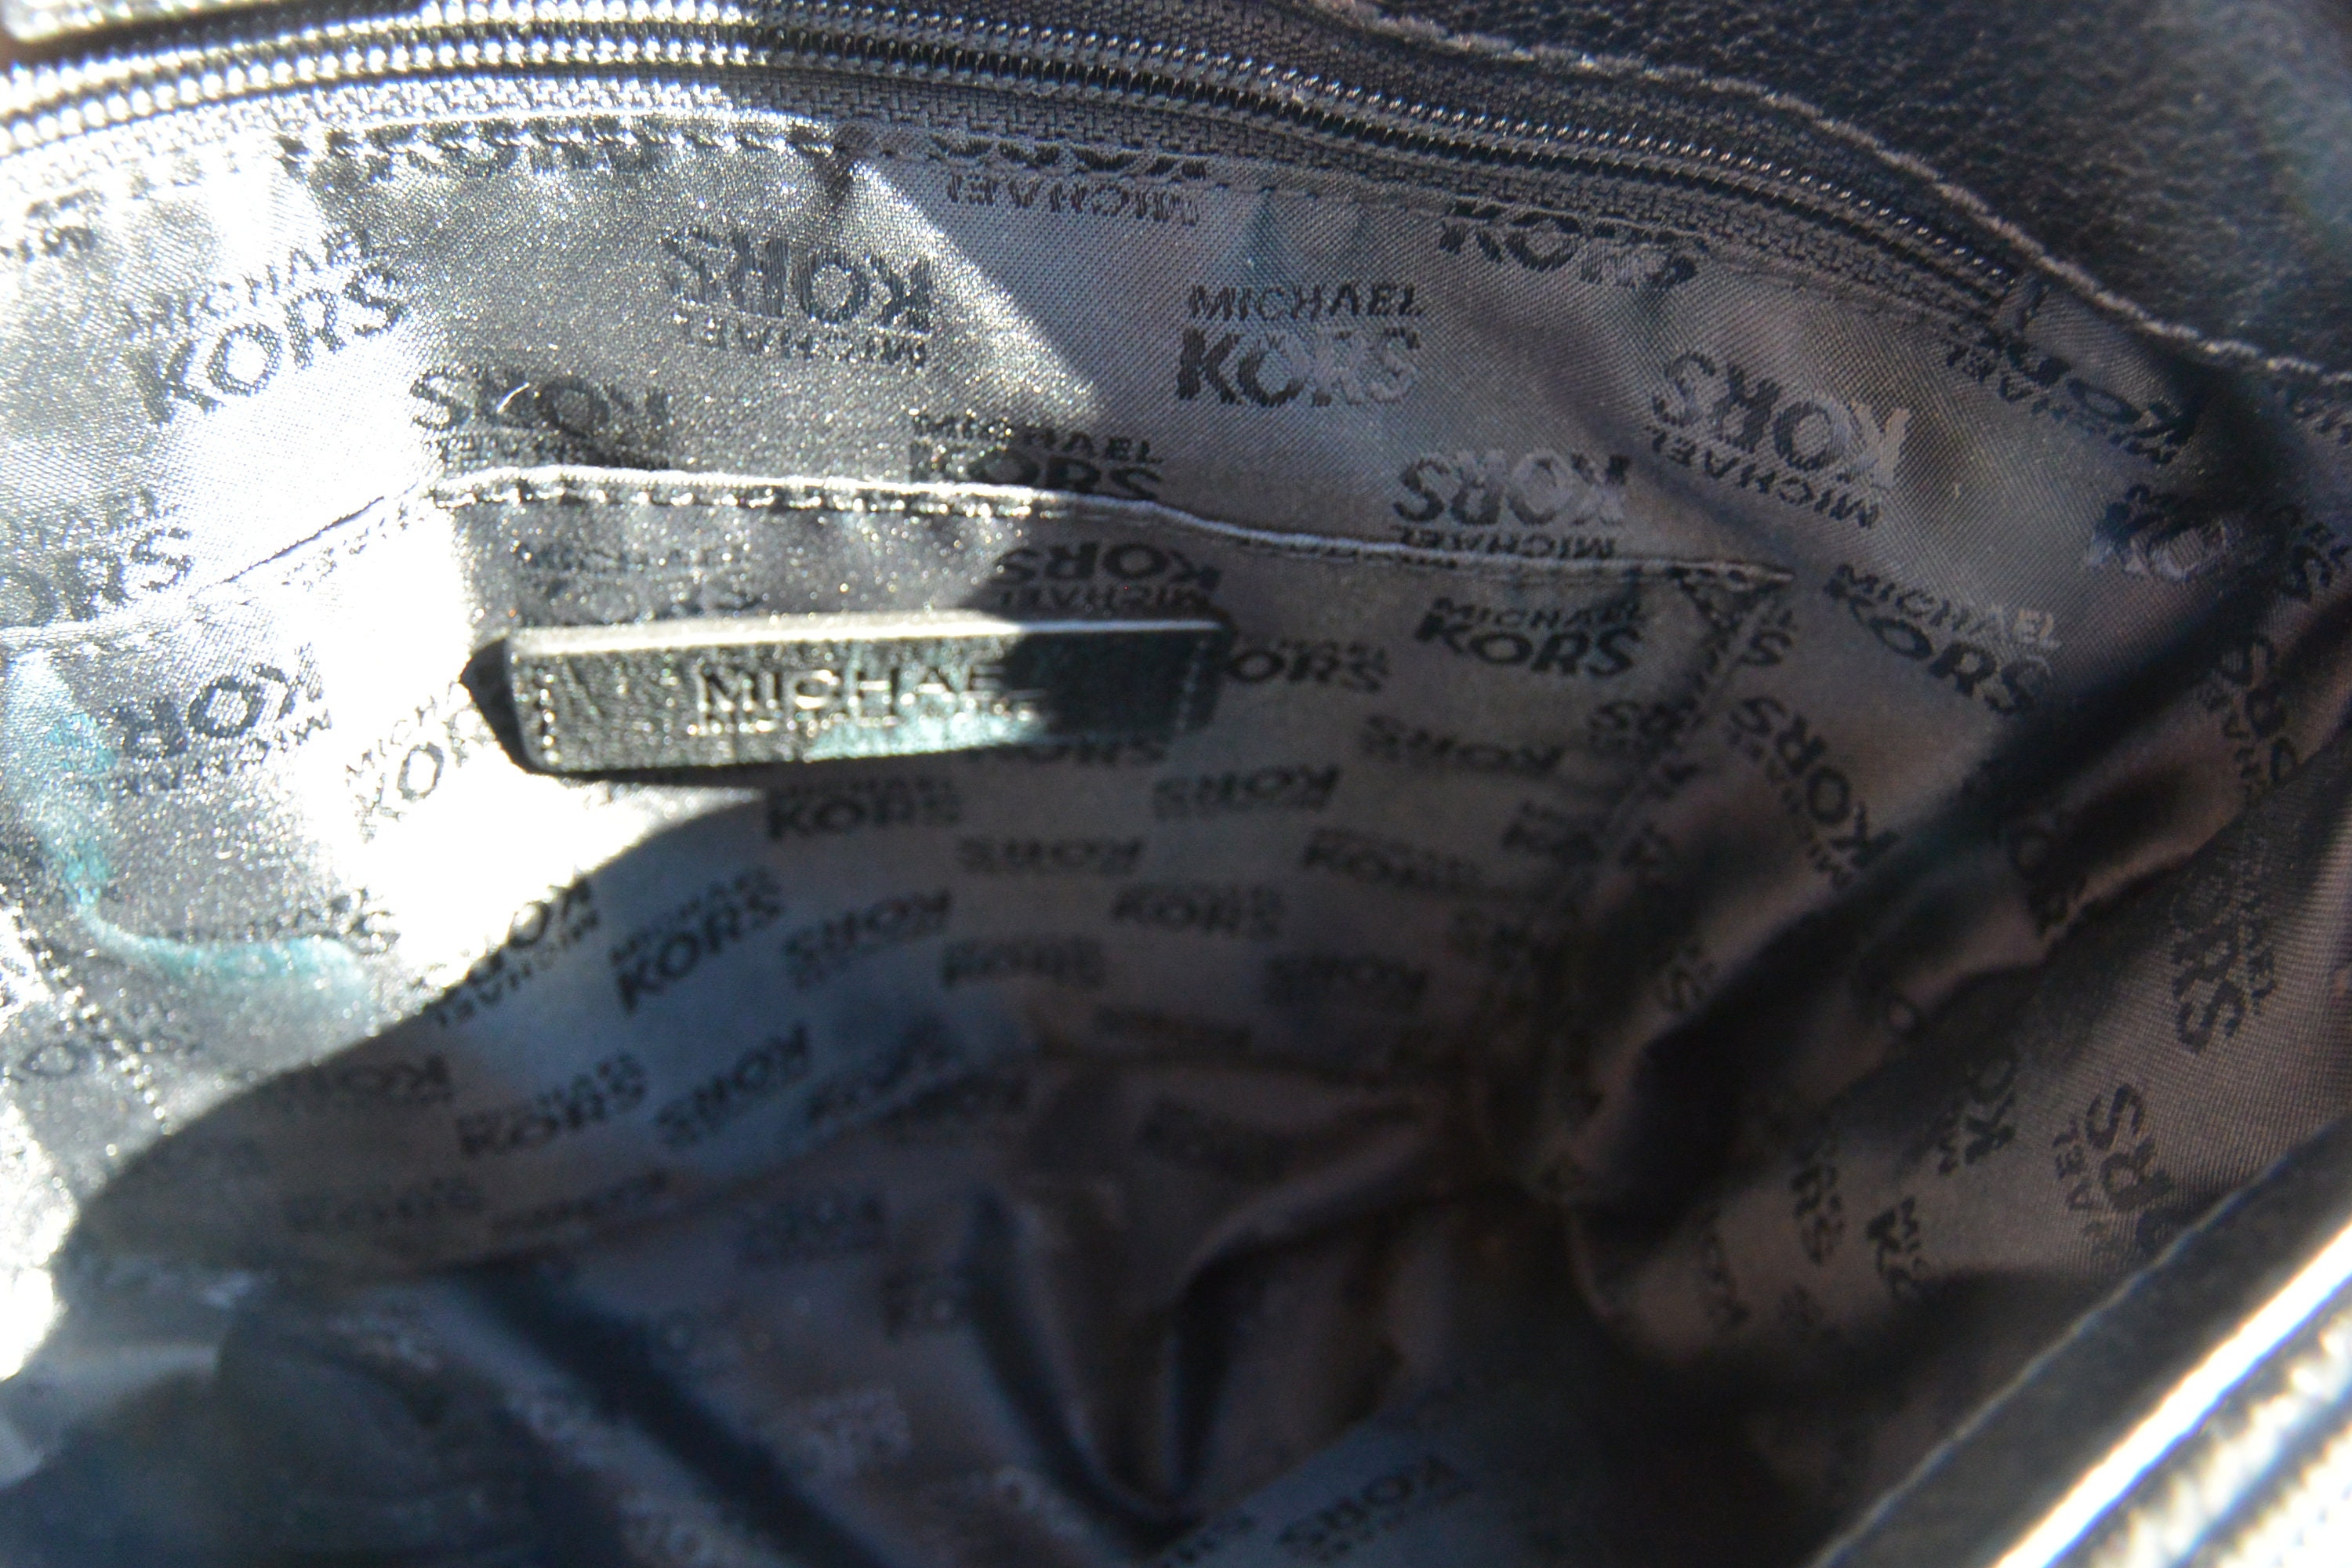 Michael Kors Bags − Sale: up to −54%